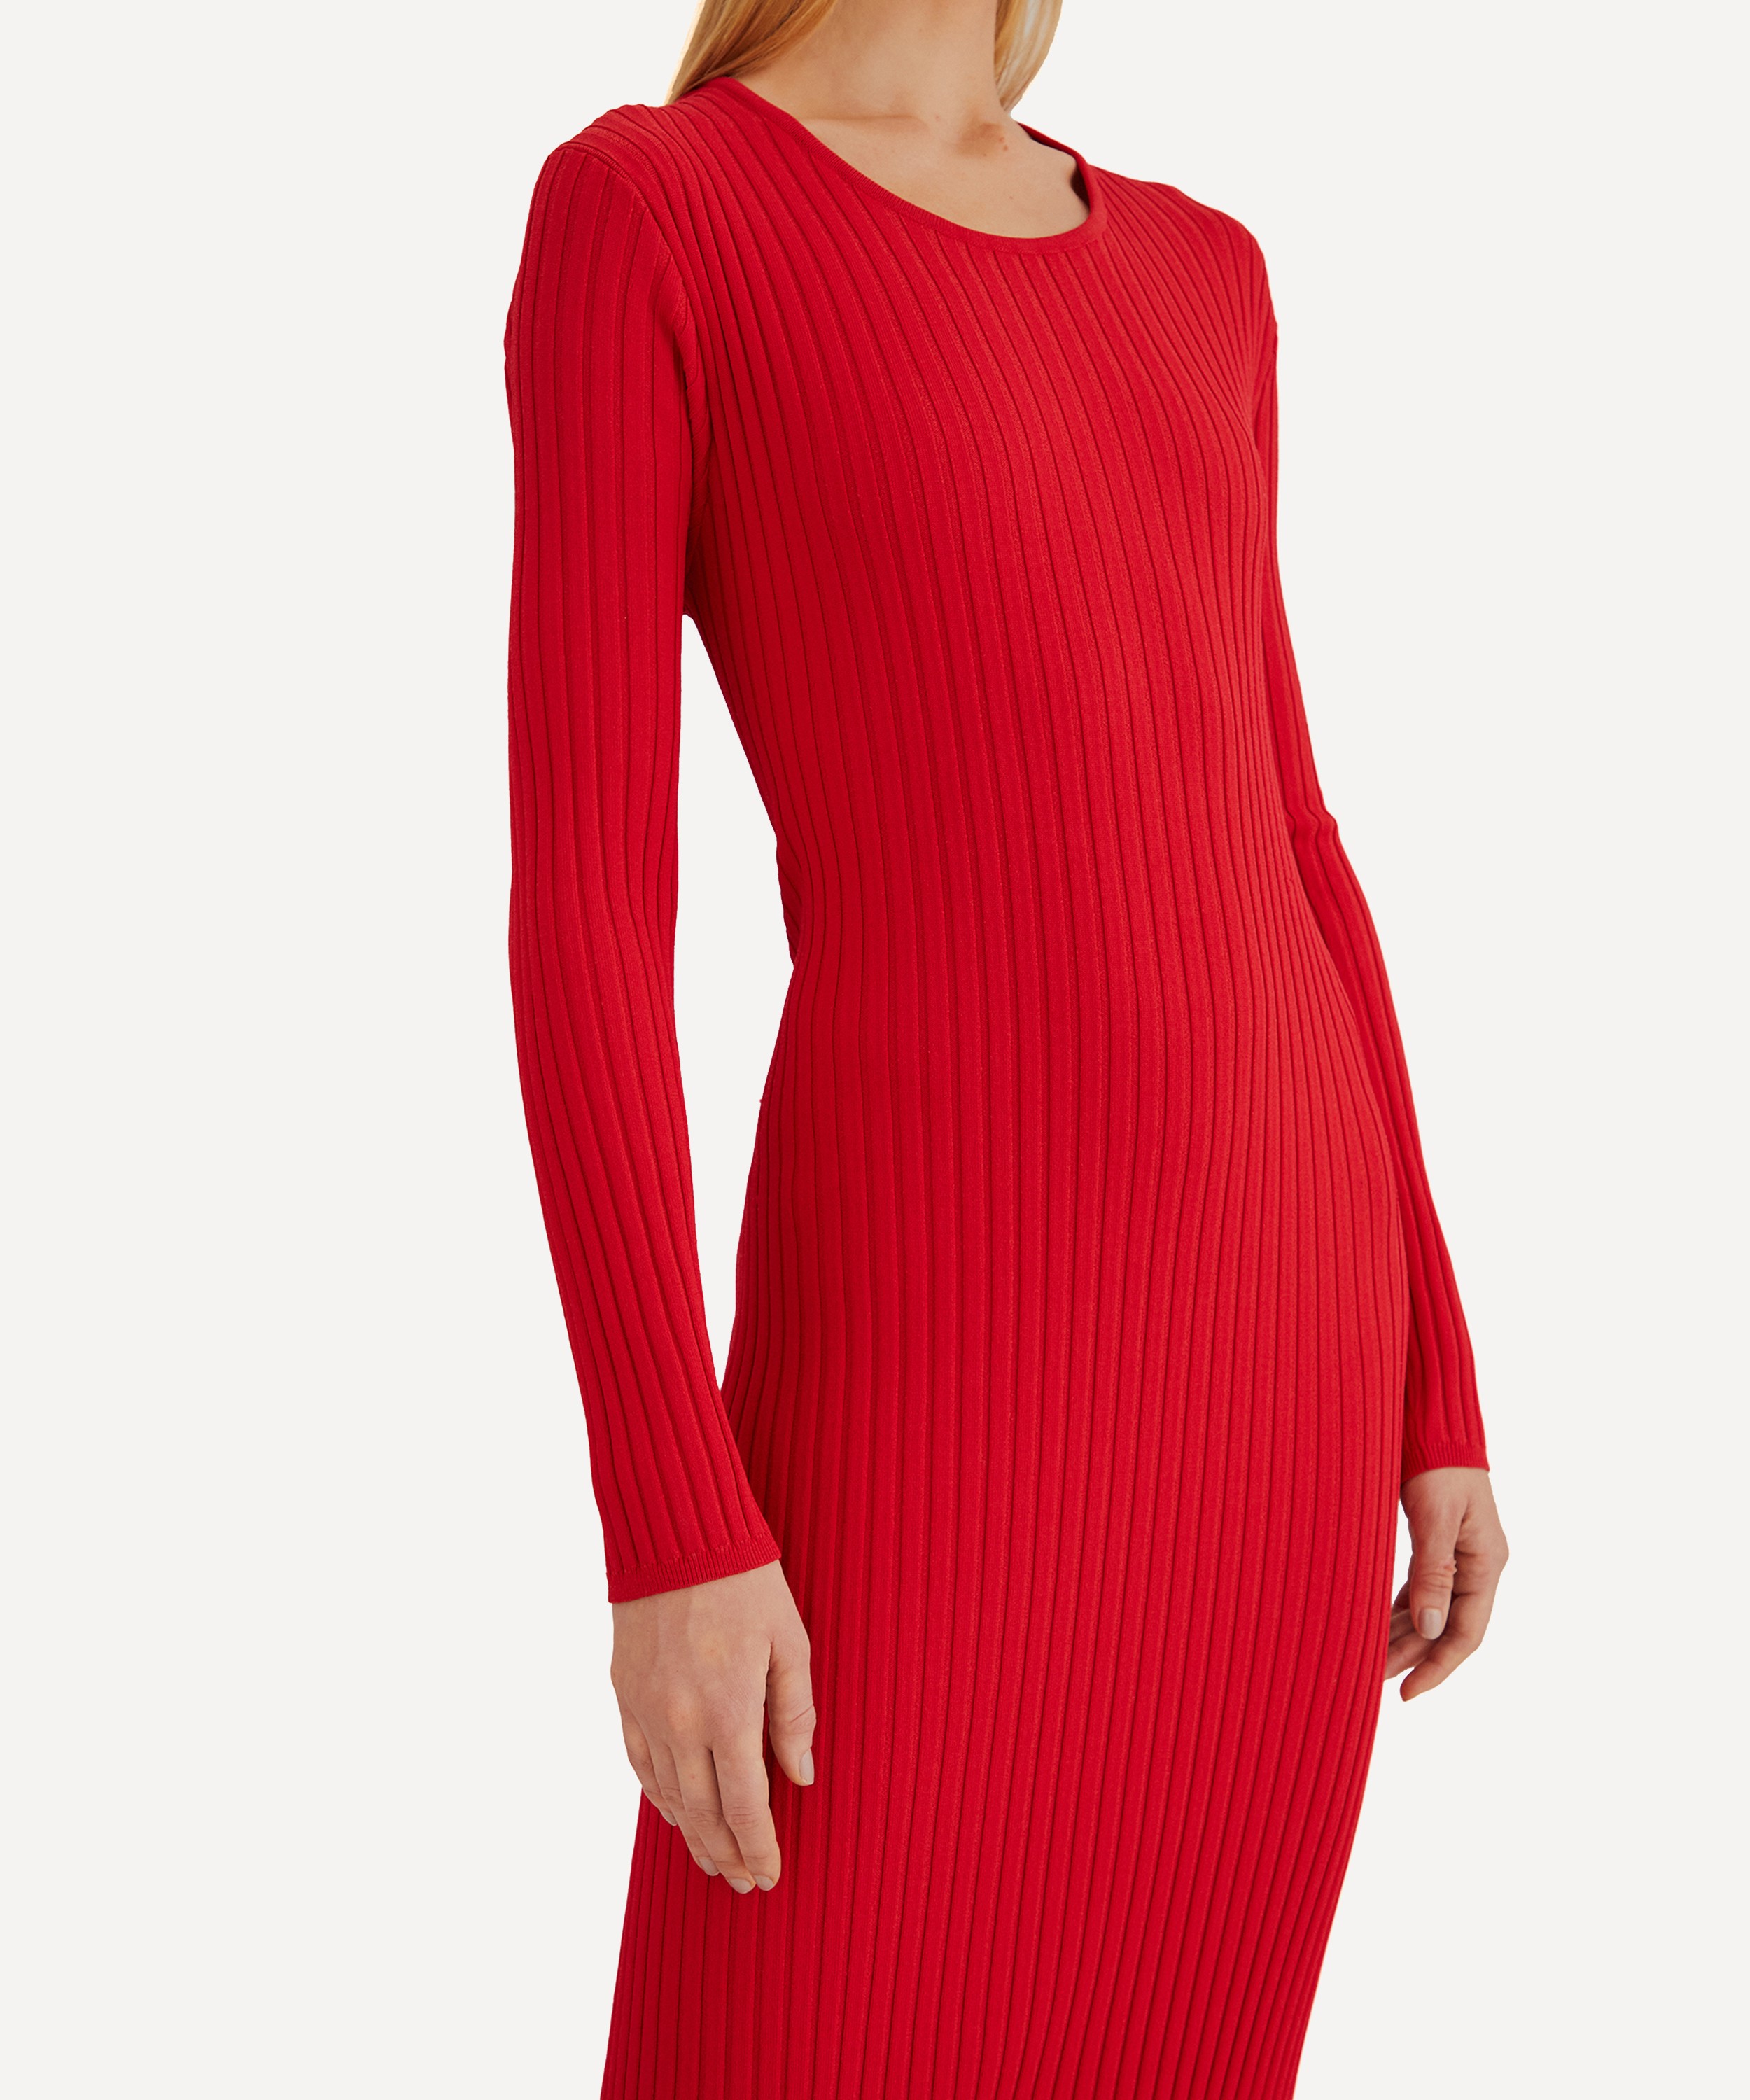 FARM Rio - Red Knit Midi-Dress image number 3